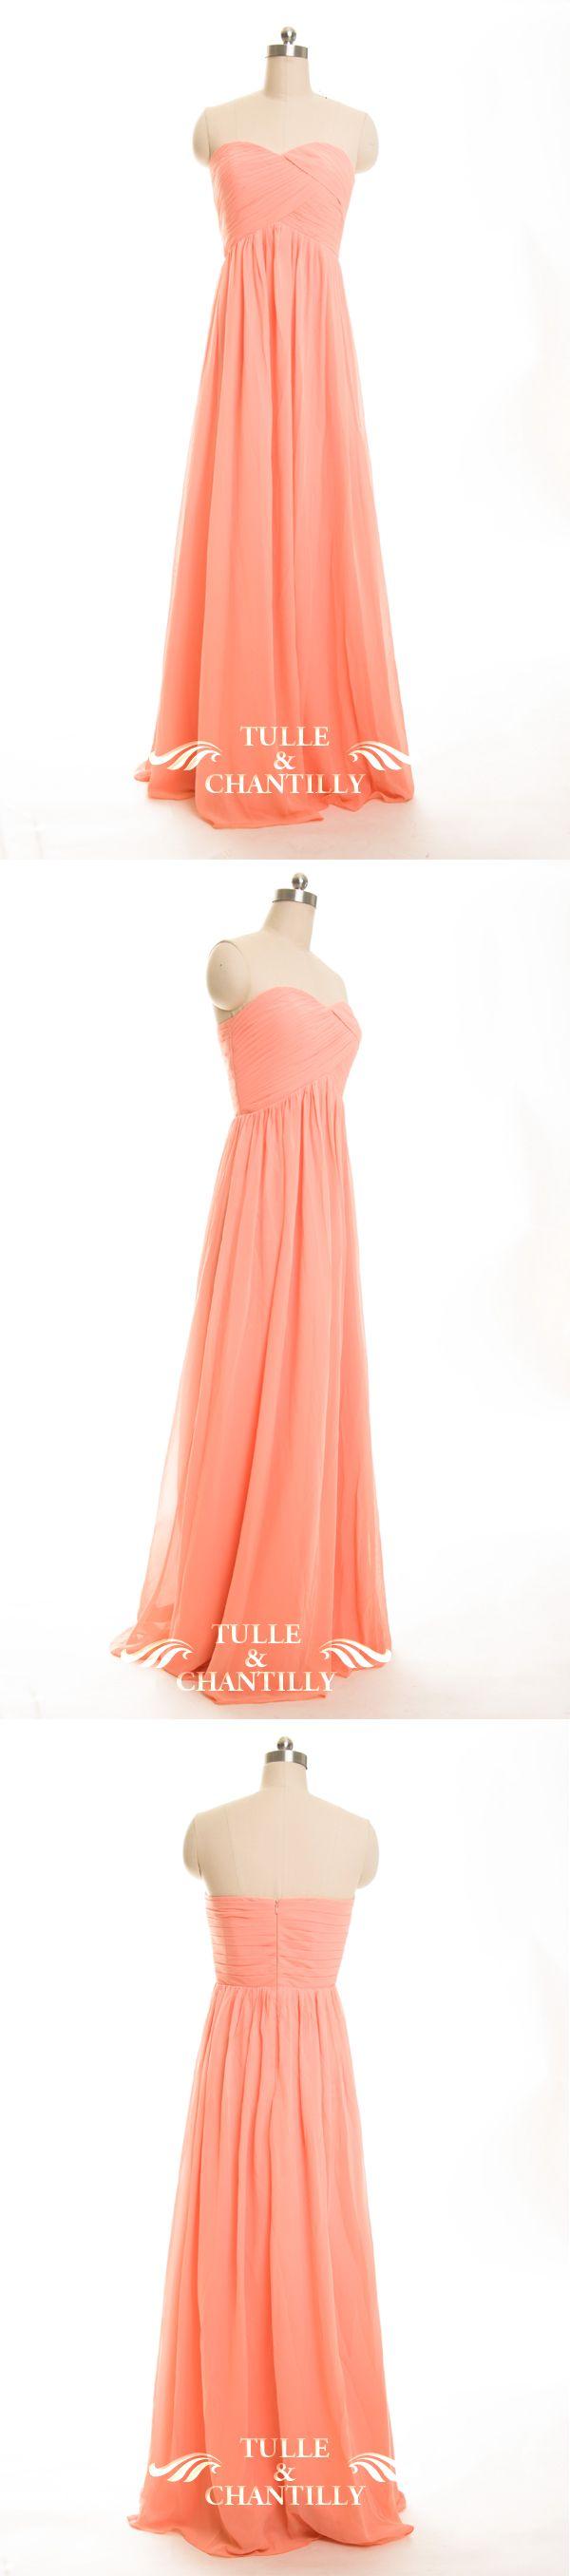 Wedding - Elegant Pink Colored Long Pleated Strapless Chiffon Bridesmaid Dress [TBQP268] - $155.00 : Custom Made Wedding, Prom, Evening Dresses Online